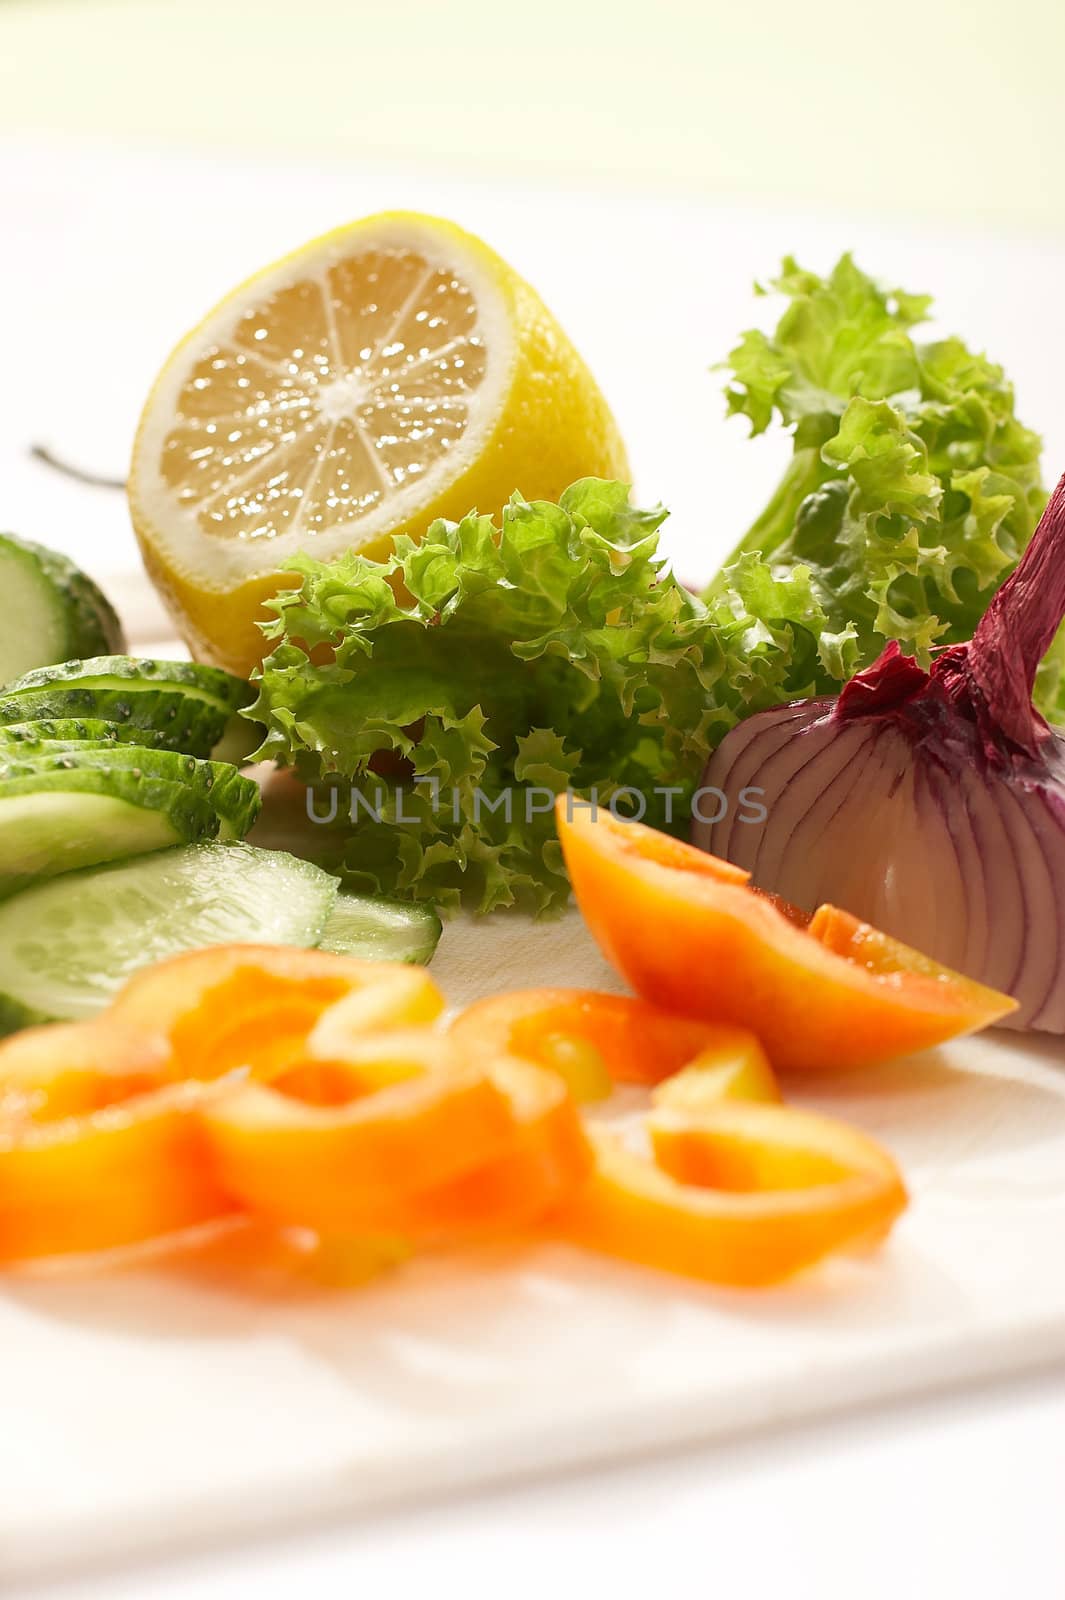 vegetable mix: lettuce, onion, lemon, cucumber